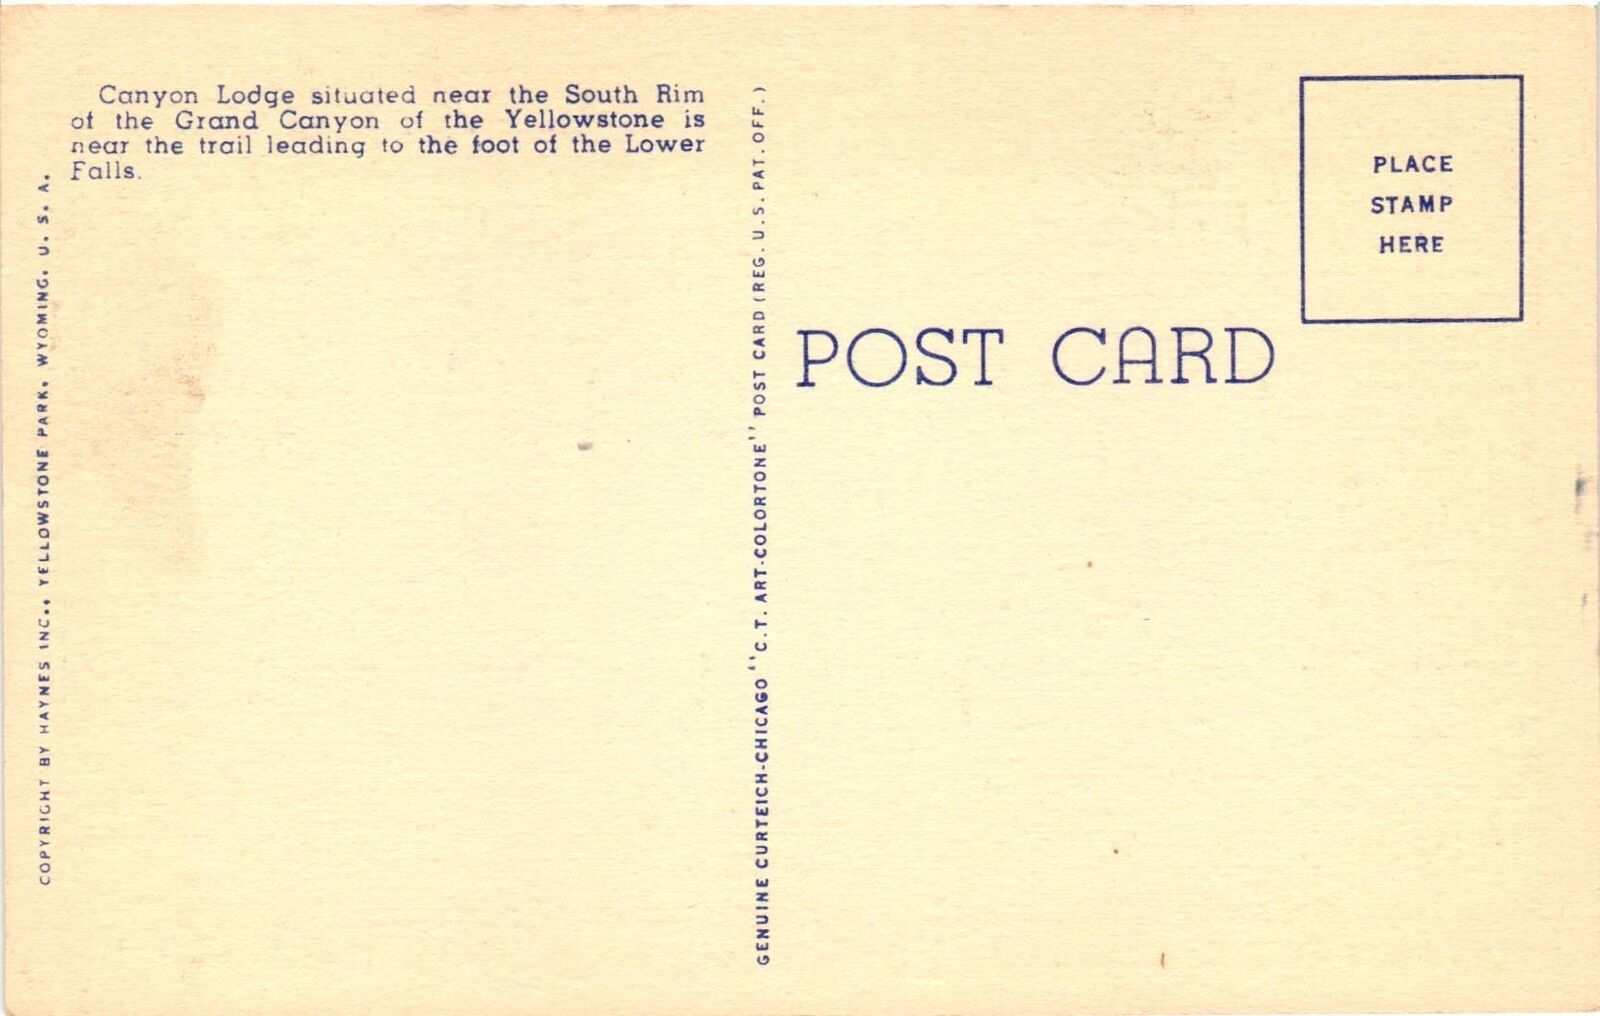 Vintage Postcard- CANYON LODGE, YELLOWSTONE NATIONAL PARK, WY.